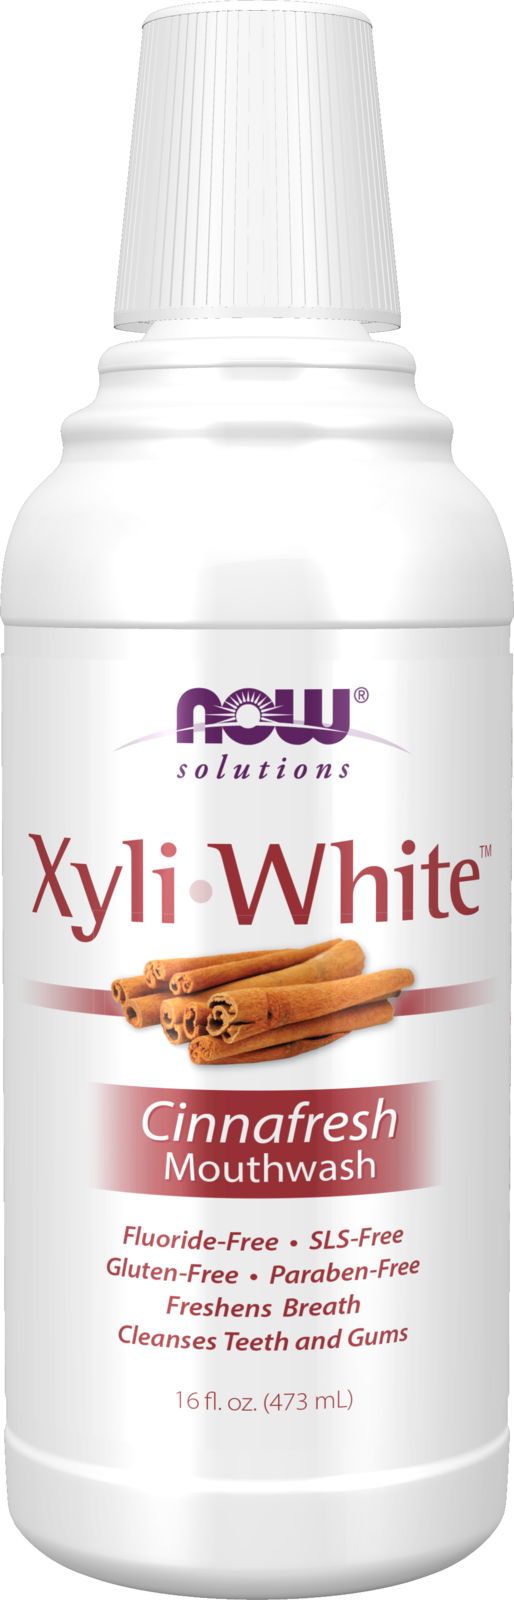 Xyliwhite™ Cinnafresh Mouthwash - 16 oz. Bottle Front